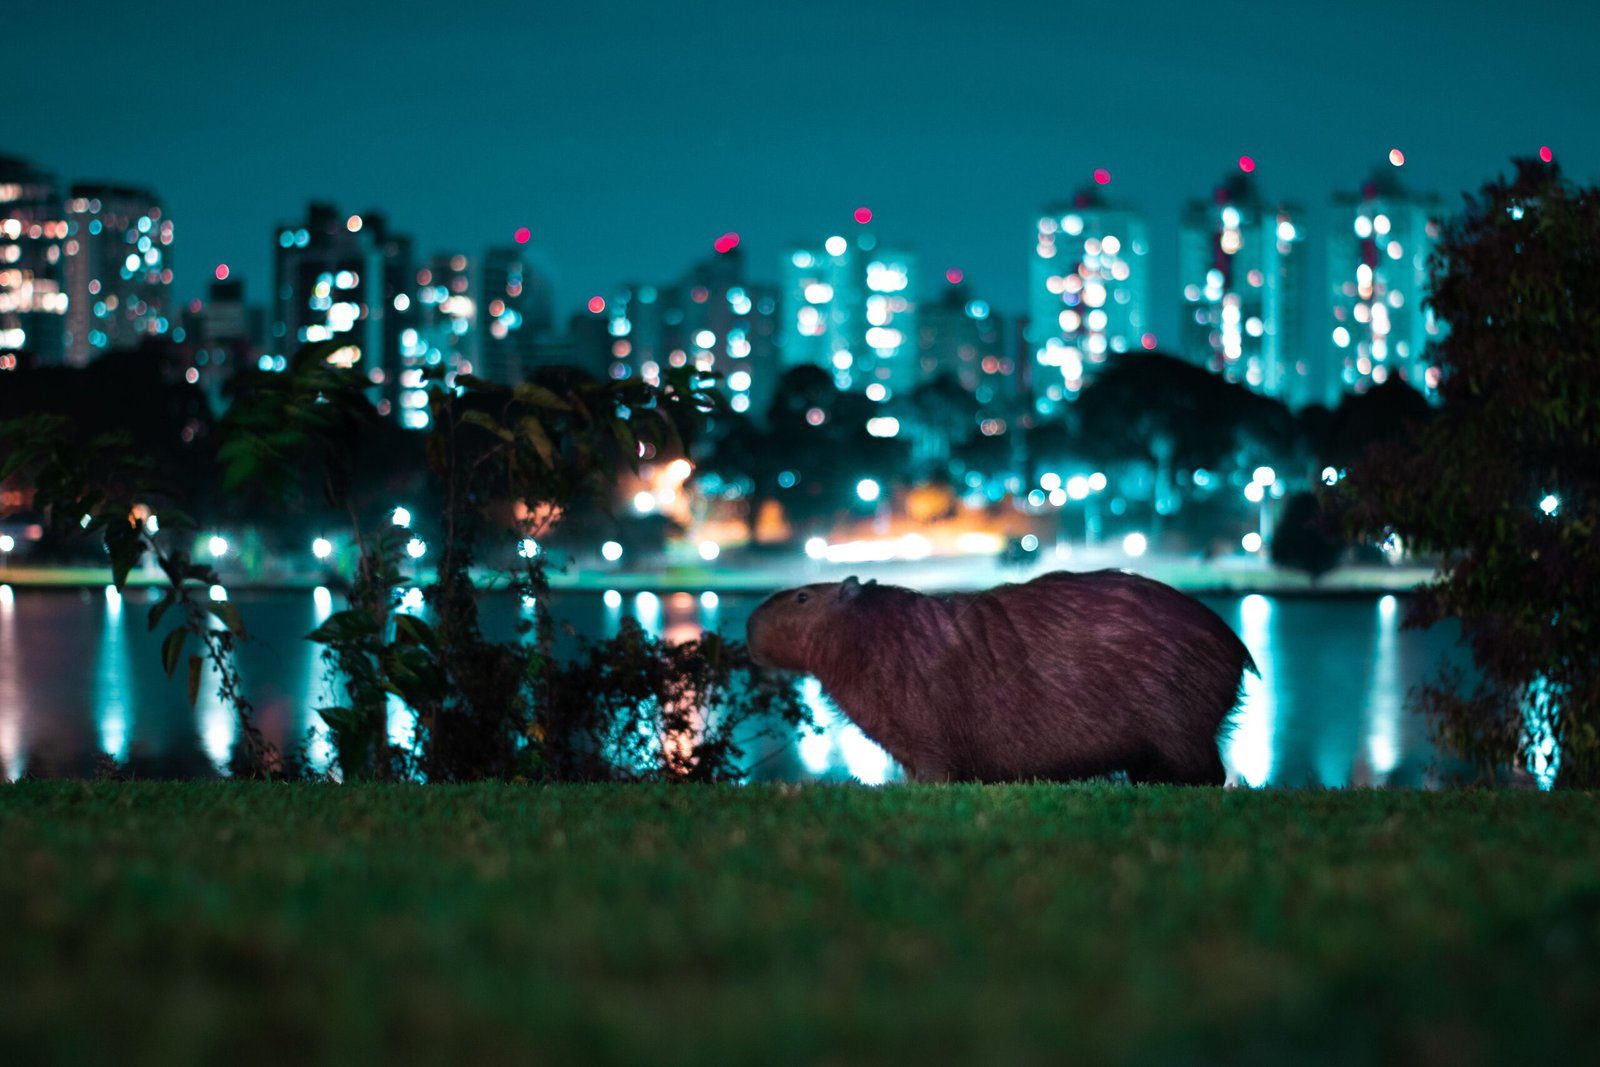 How to Get a Capybara as a Pet